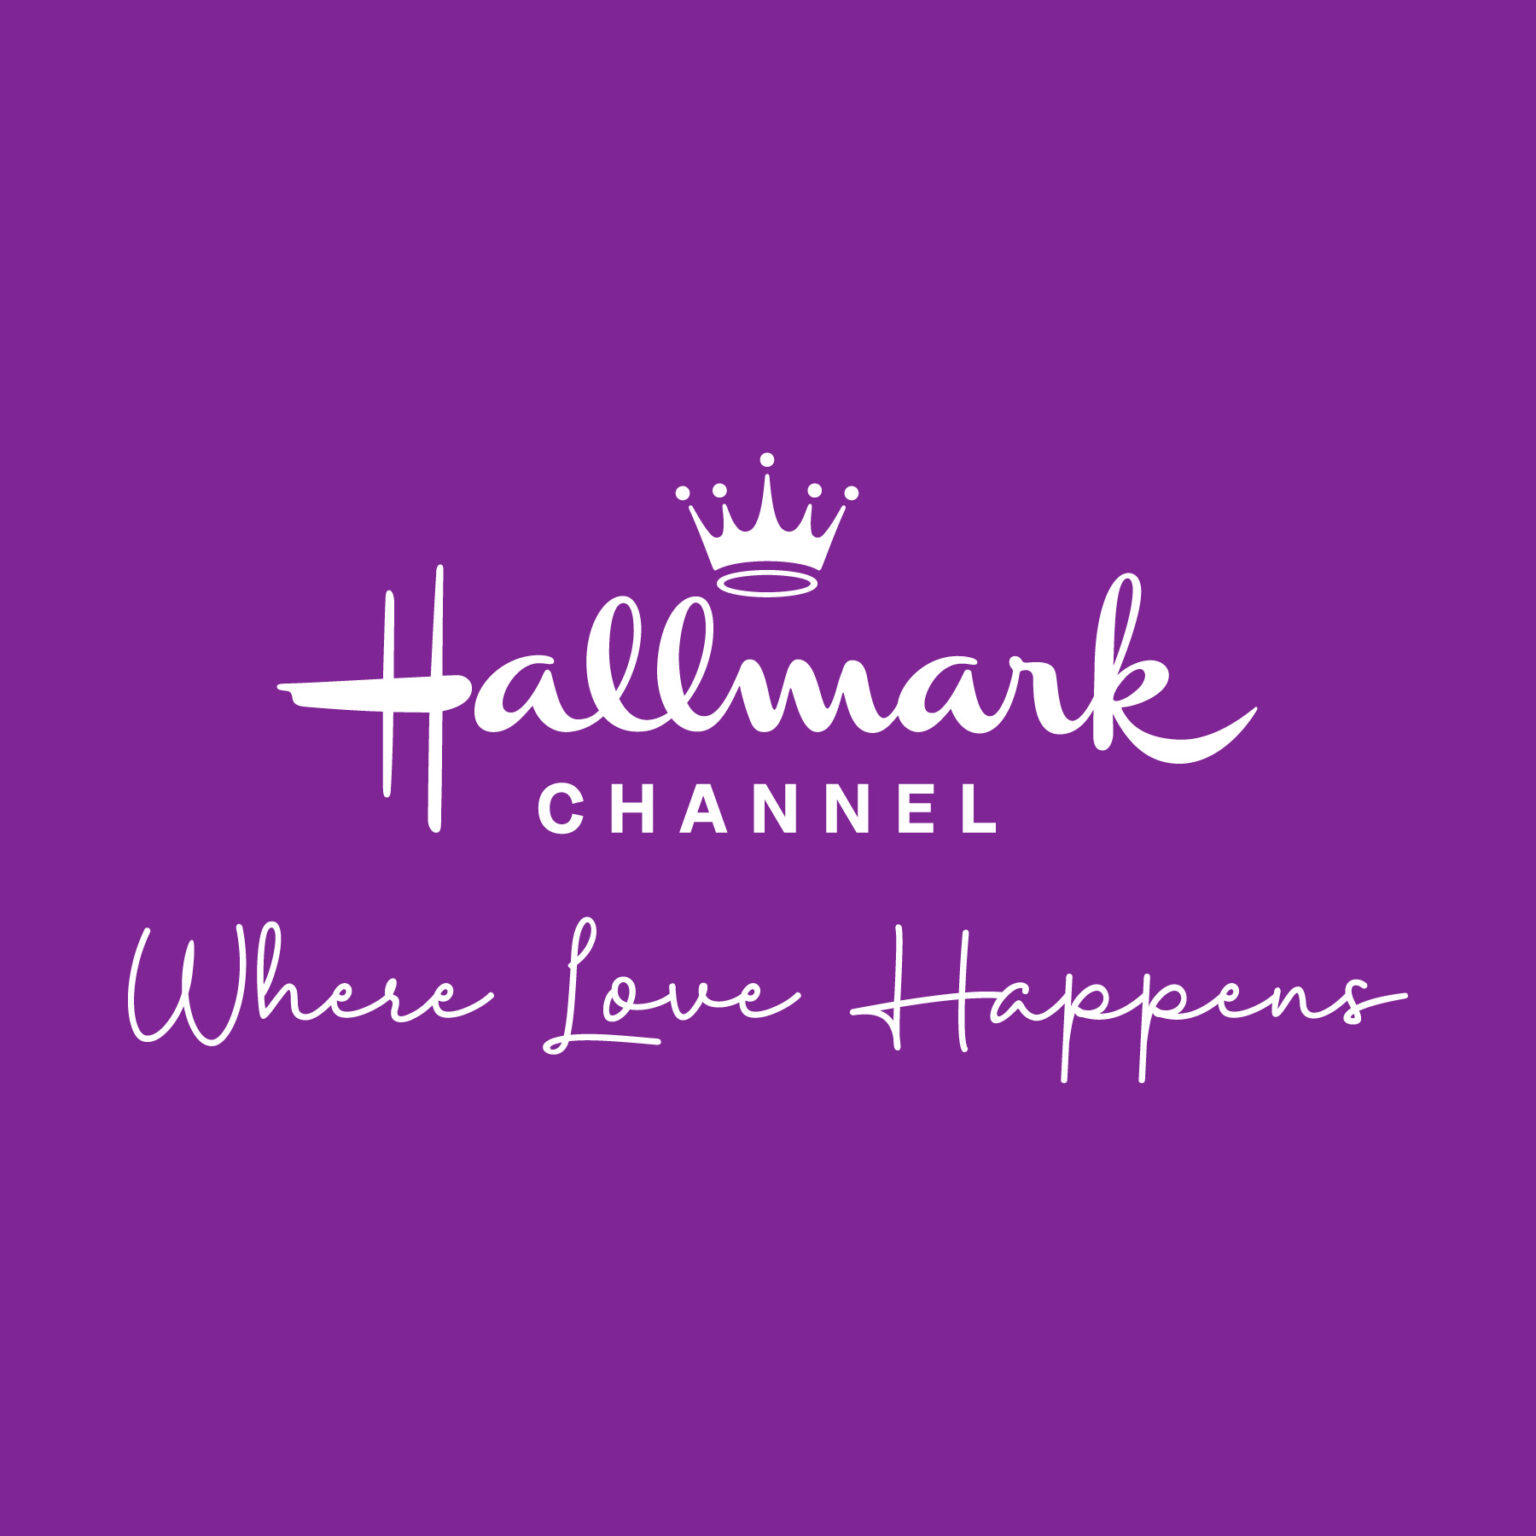 hallmark-channel-tagline-hallmark-corporate